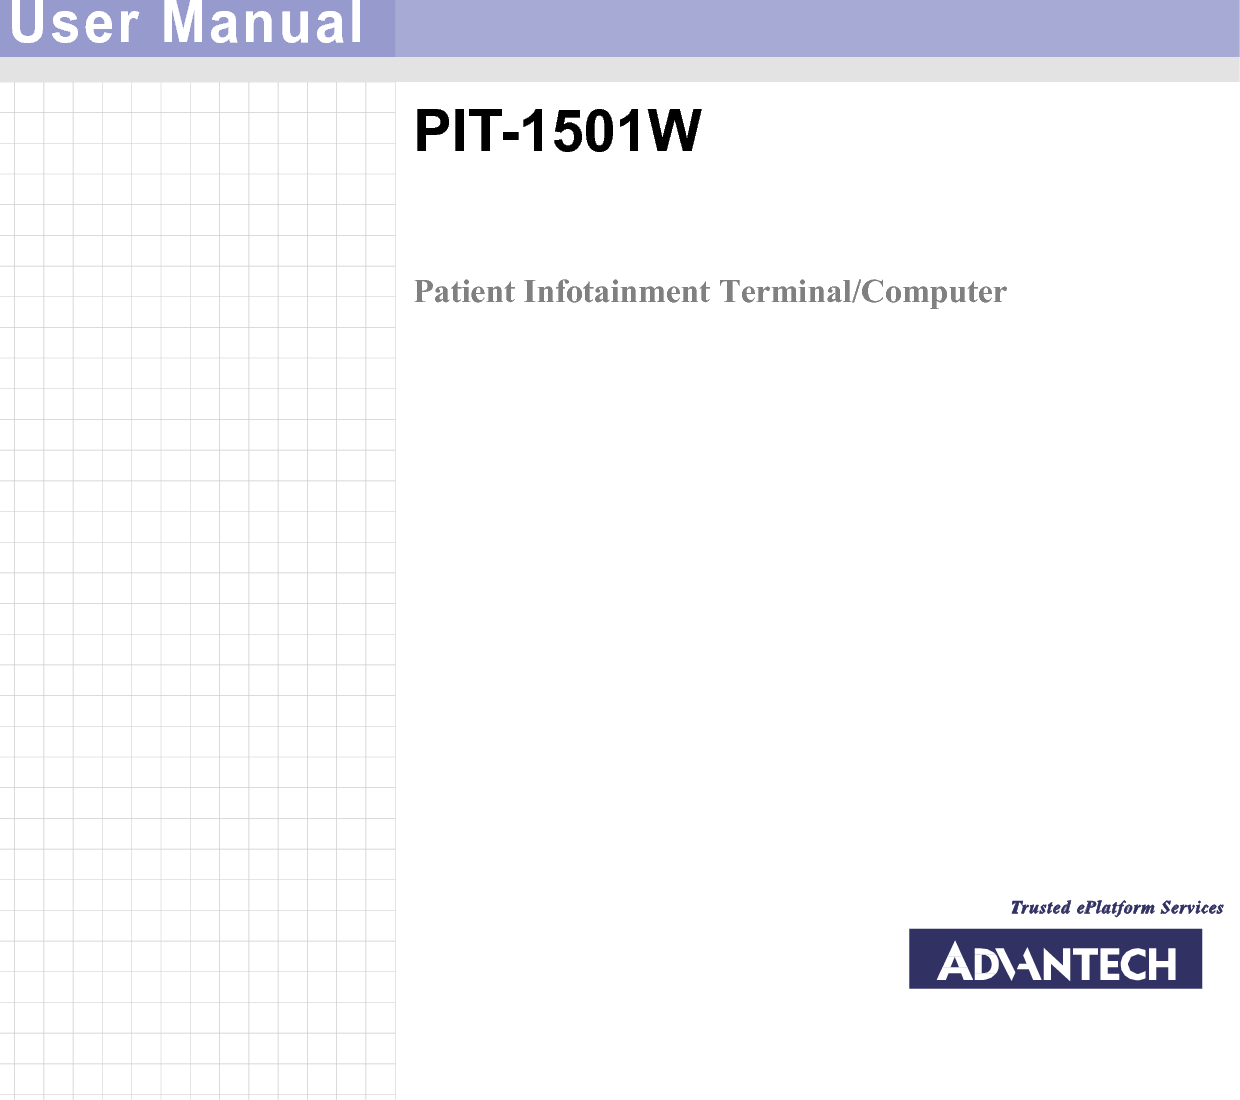 User ManualPIT-1501WPatient Infotainment Terminal/Computer 